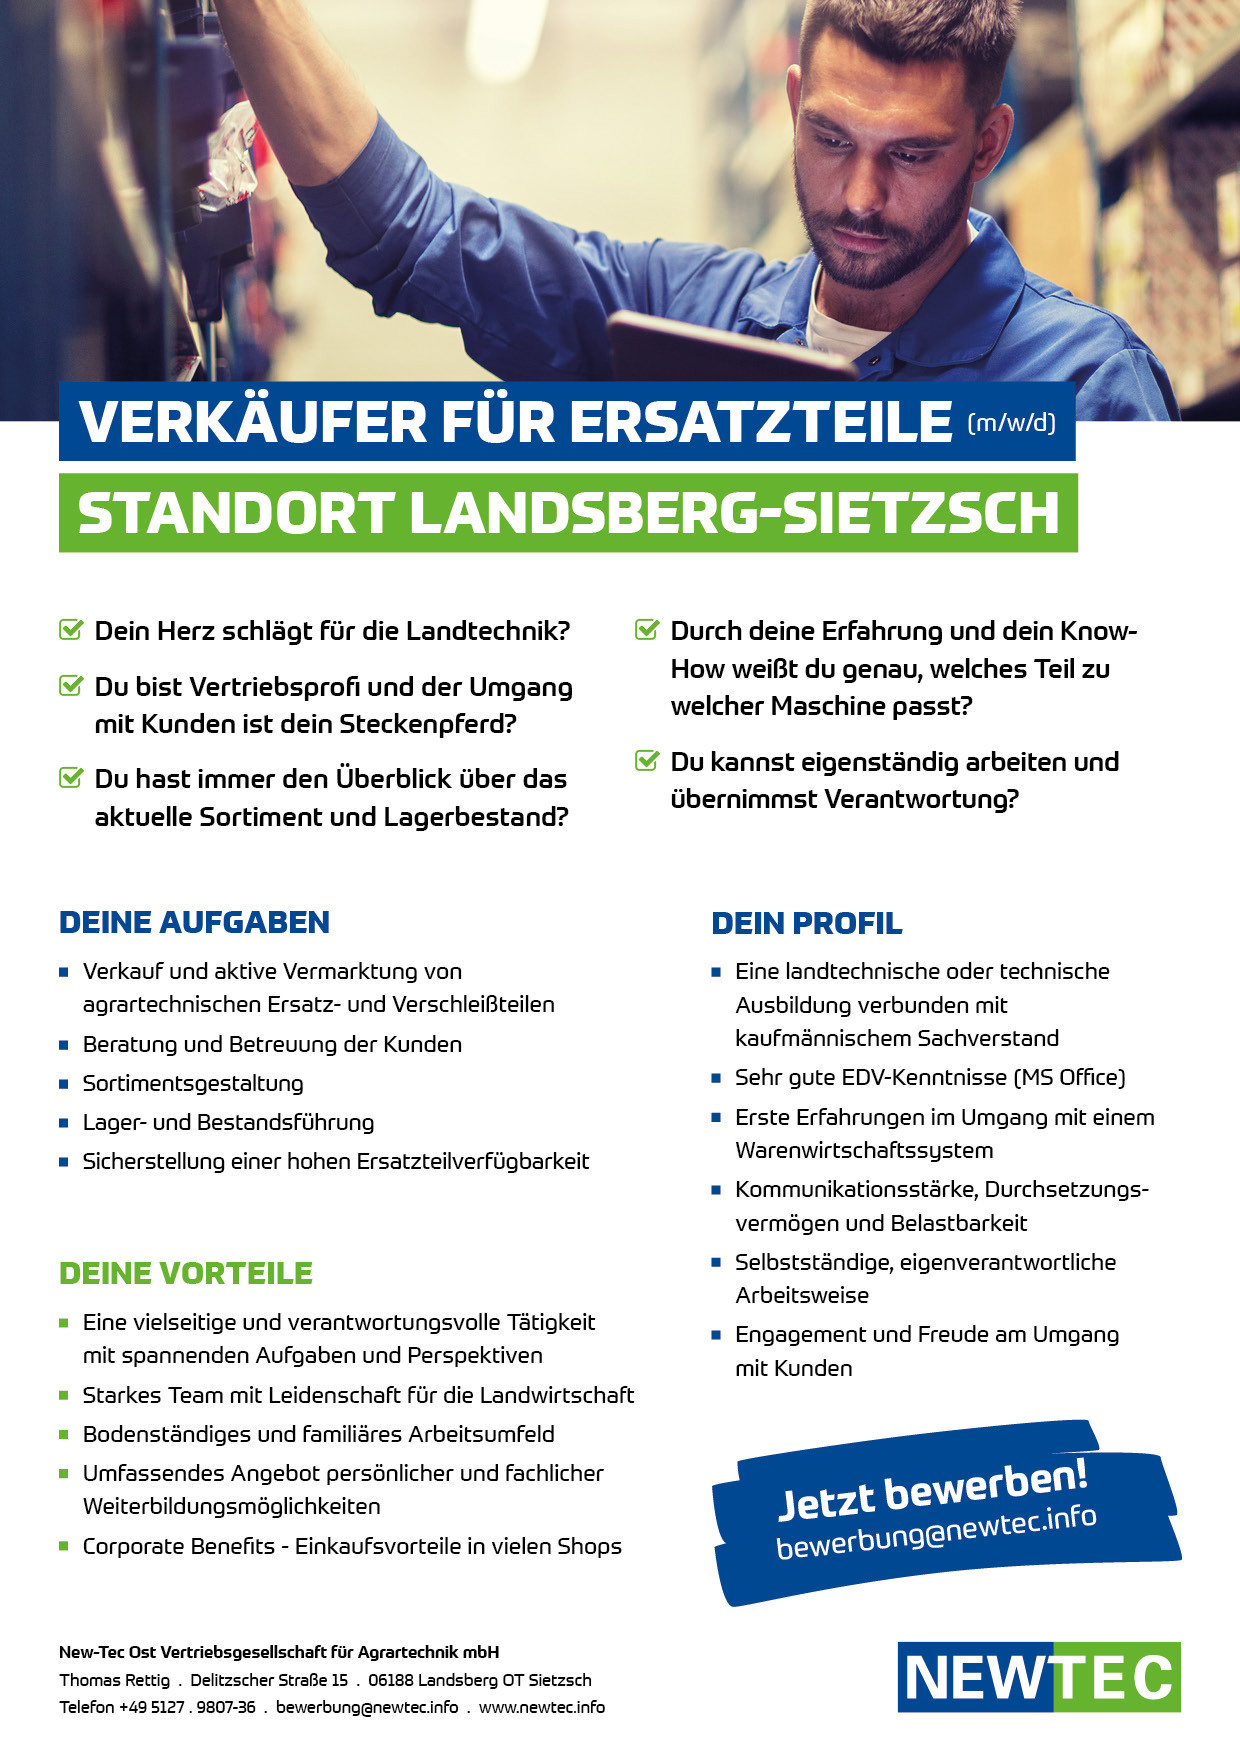 NEWTEC_Stellenanzeige_Verkaeufer-fuer-Ersatzteile_Landsberg-Sietzsch